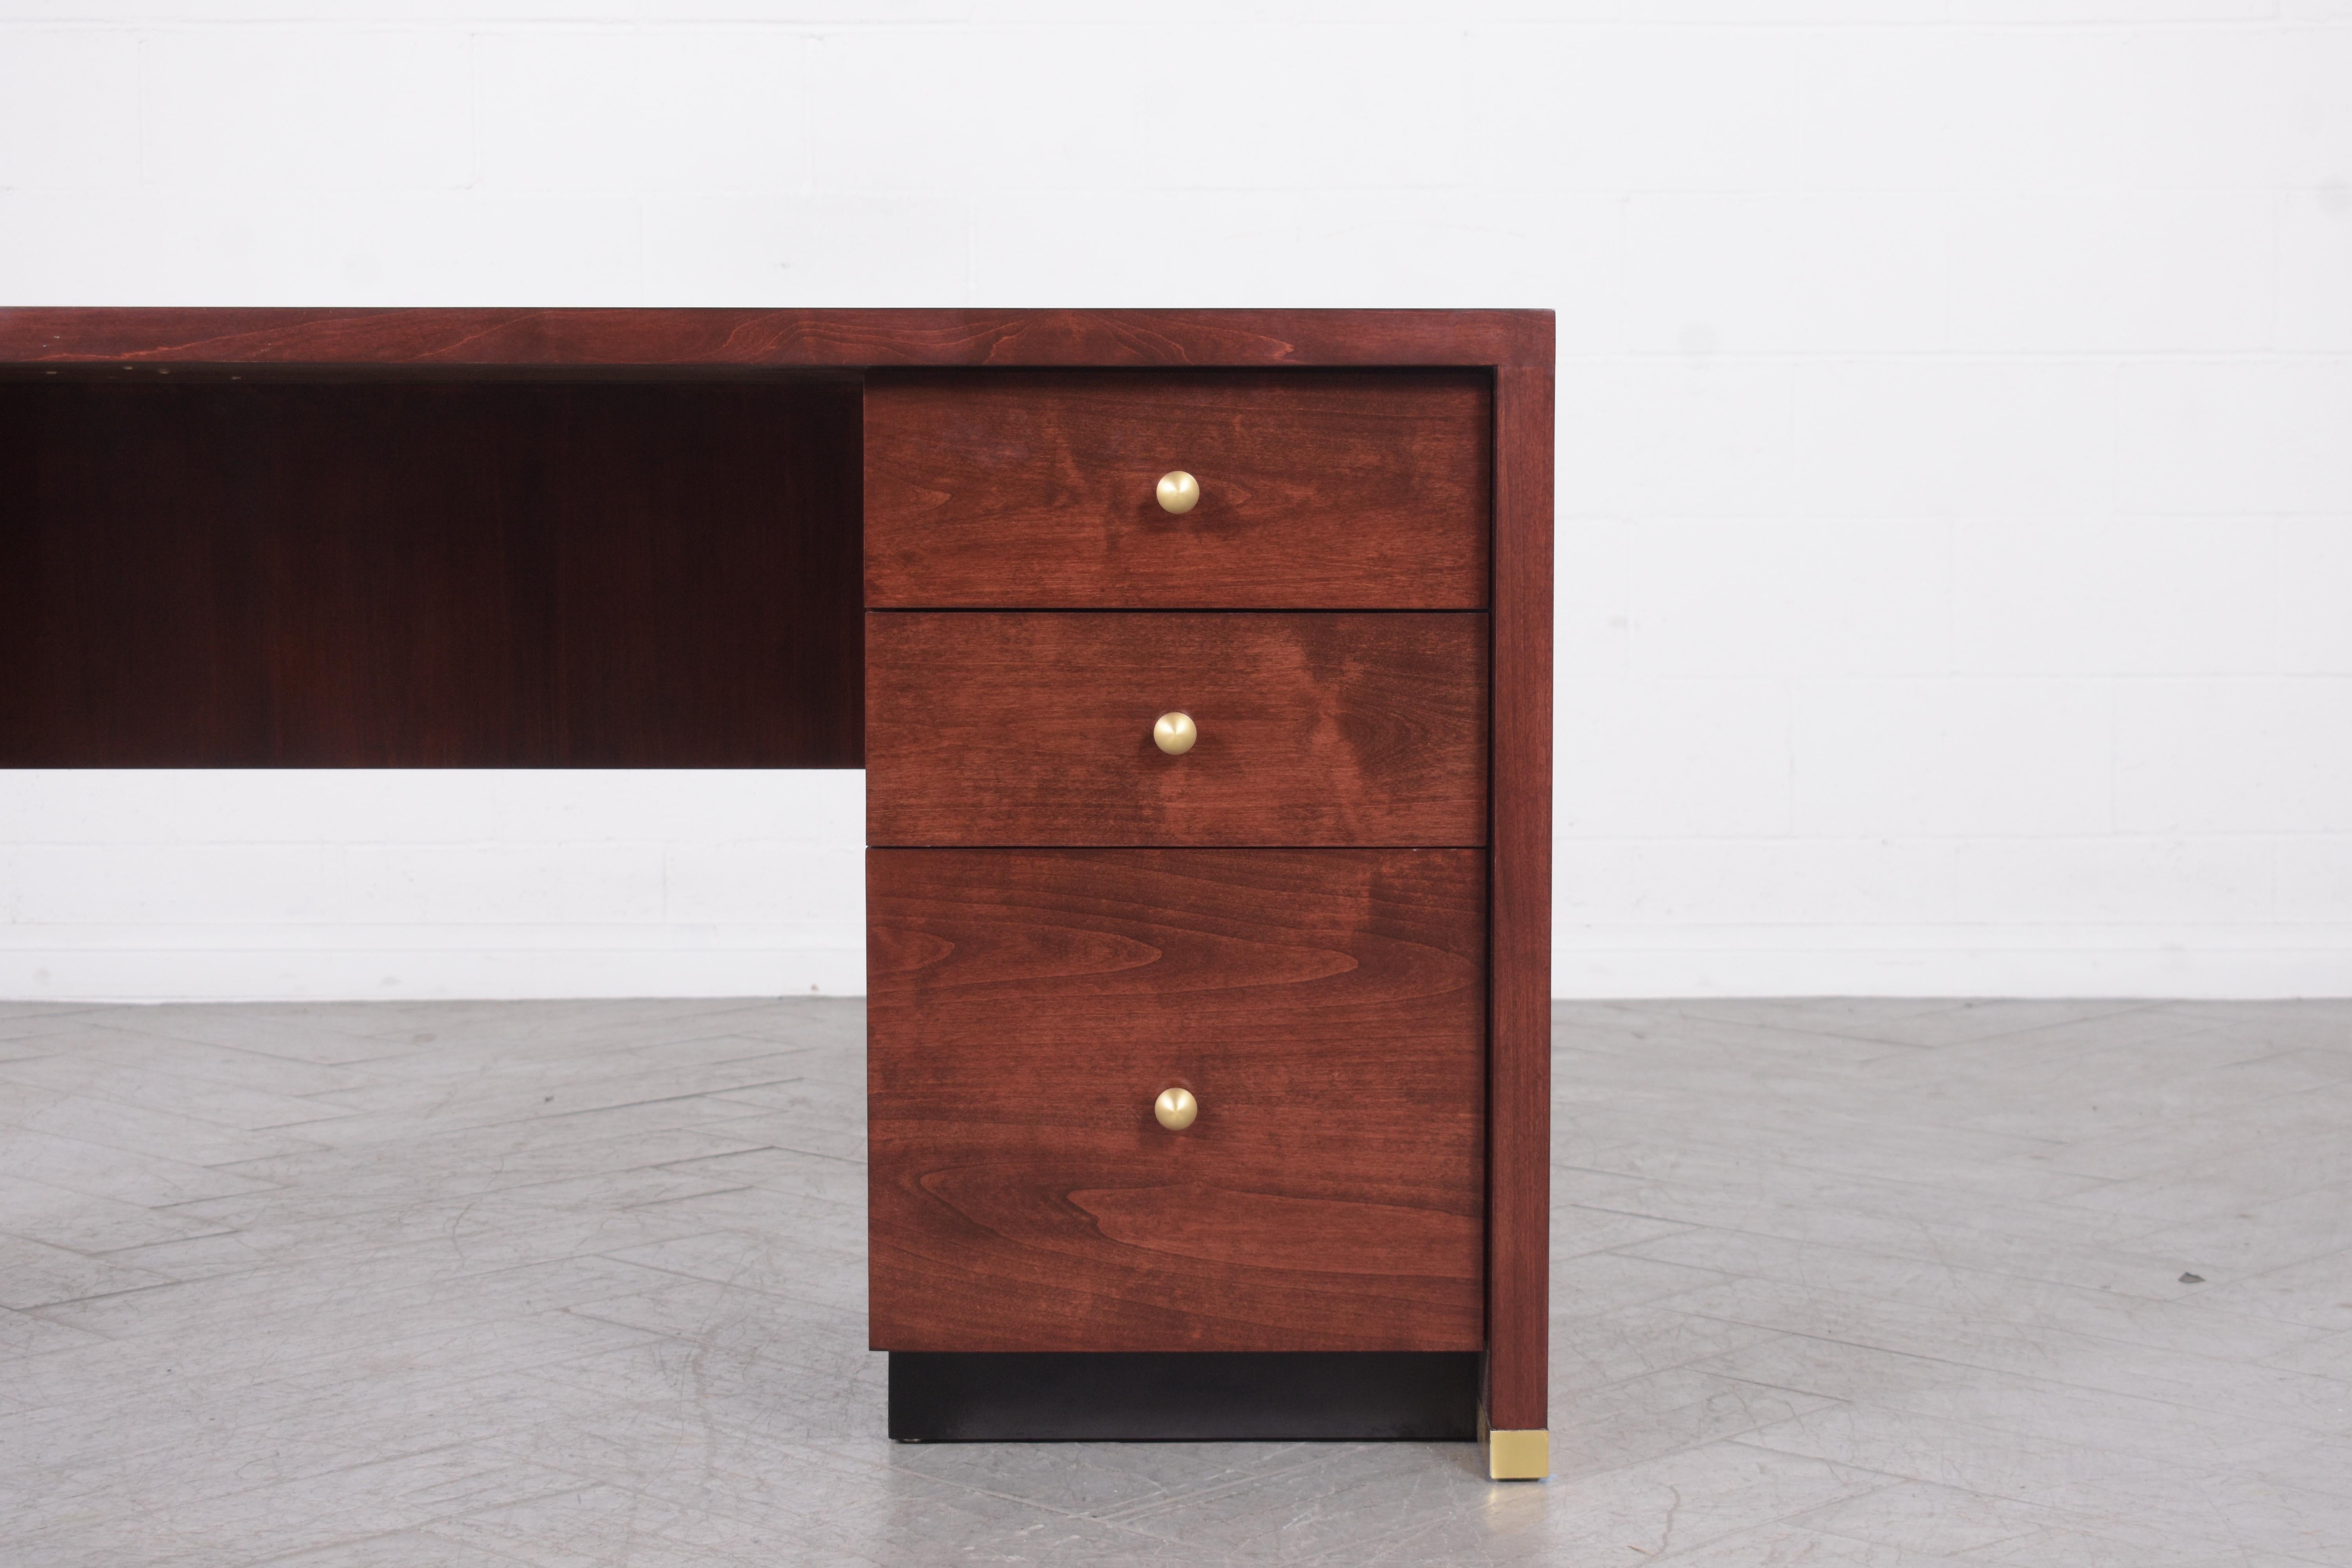 American 1970s Vintage Mid-Century Modern Mahogany Desk: Timeless Elegance & Quality For Sale